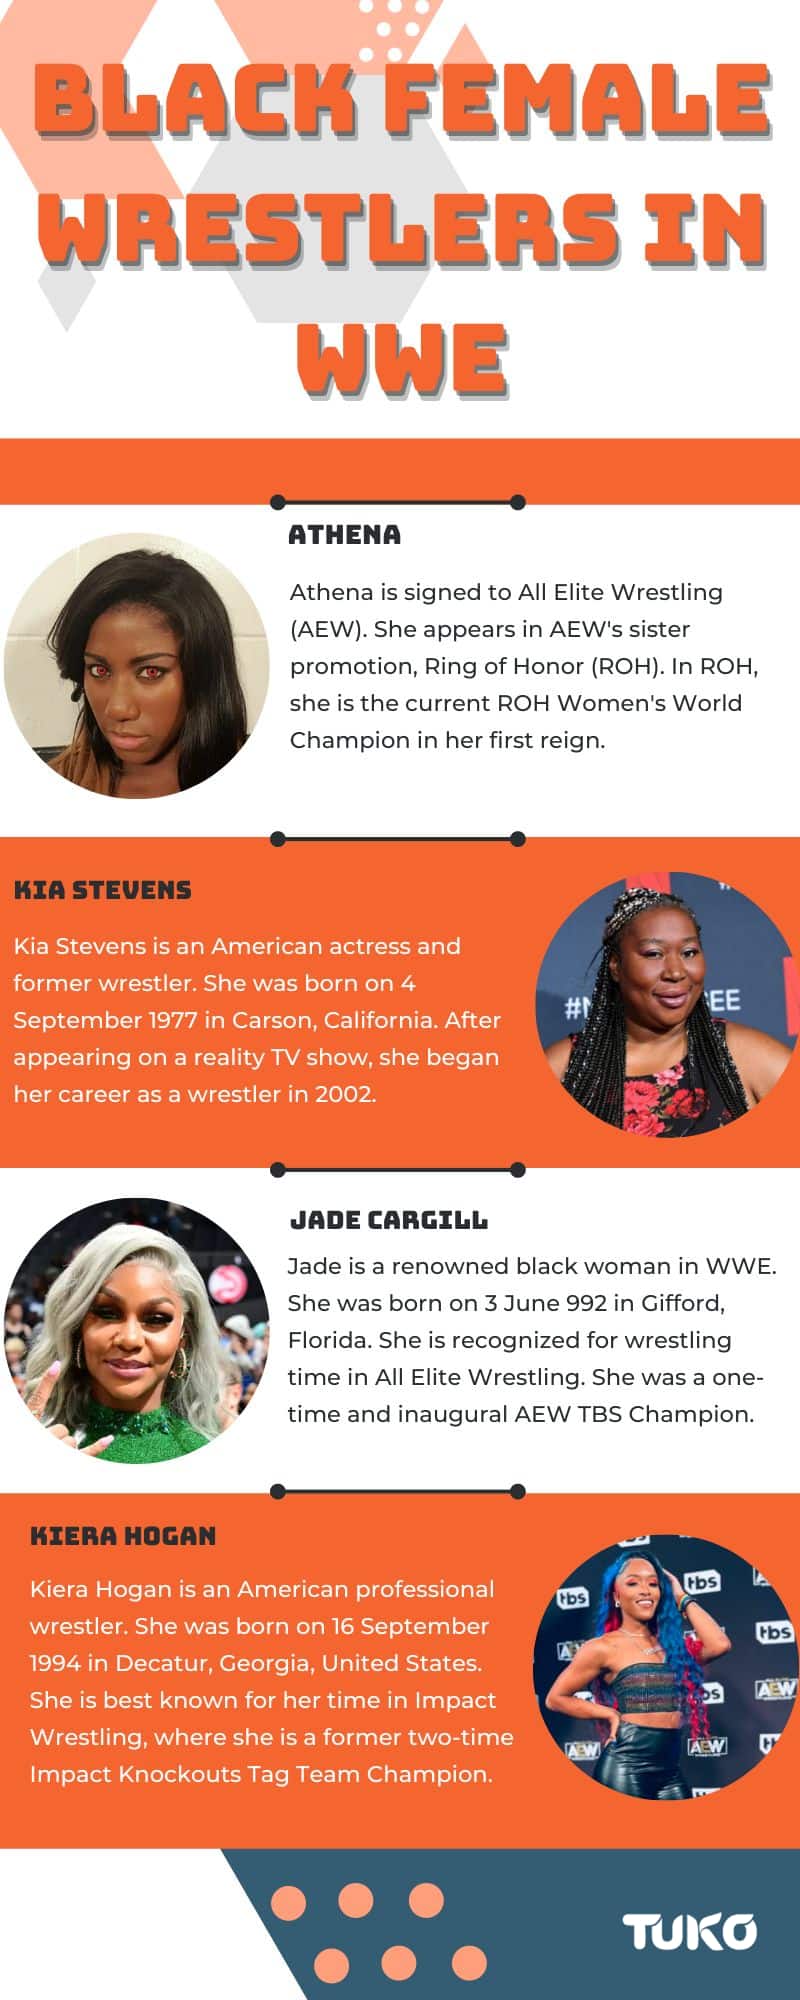 Black female wrestlers in WWE